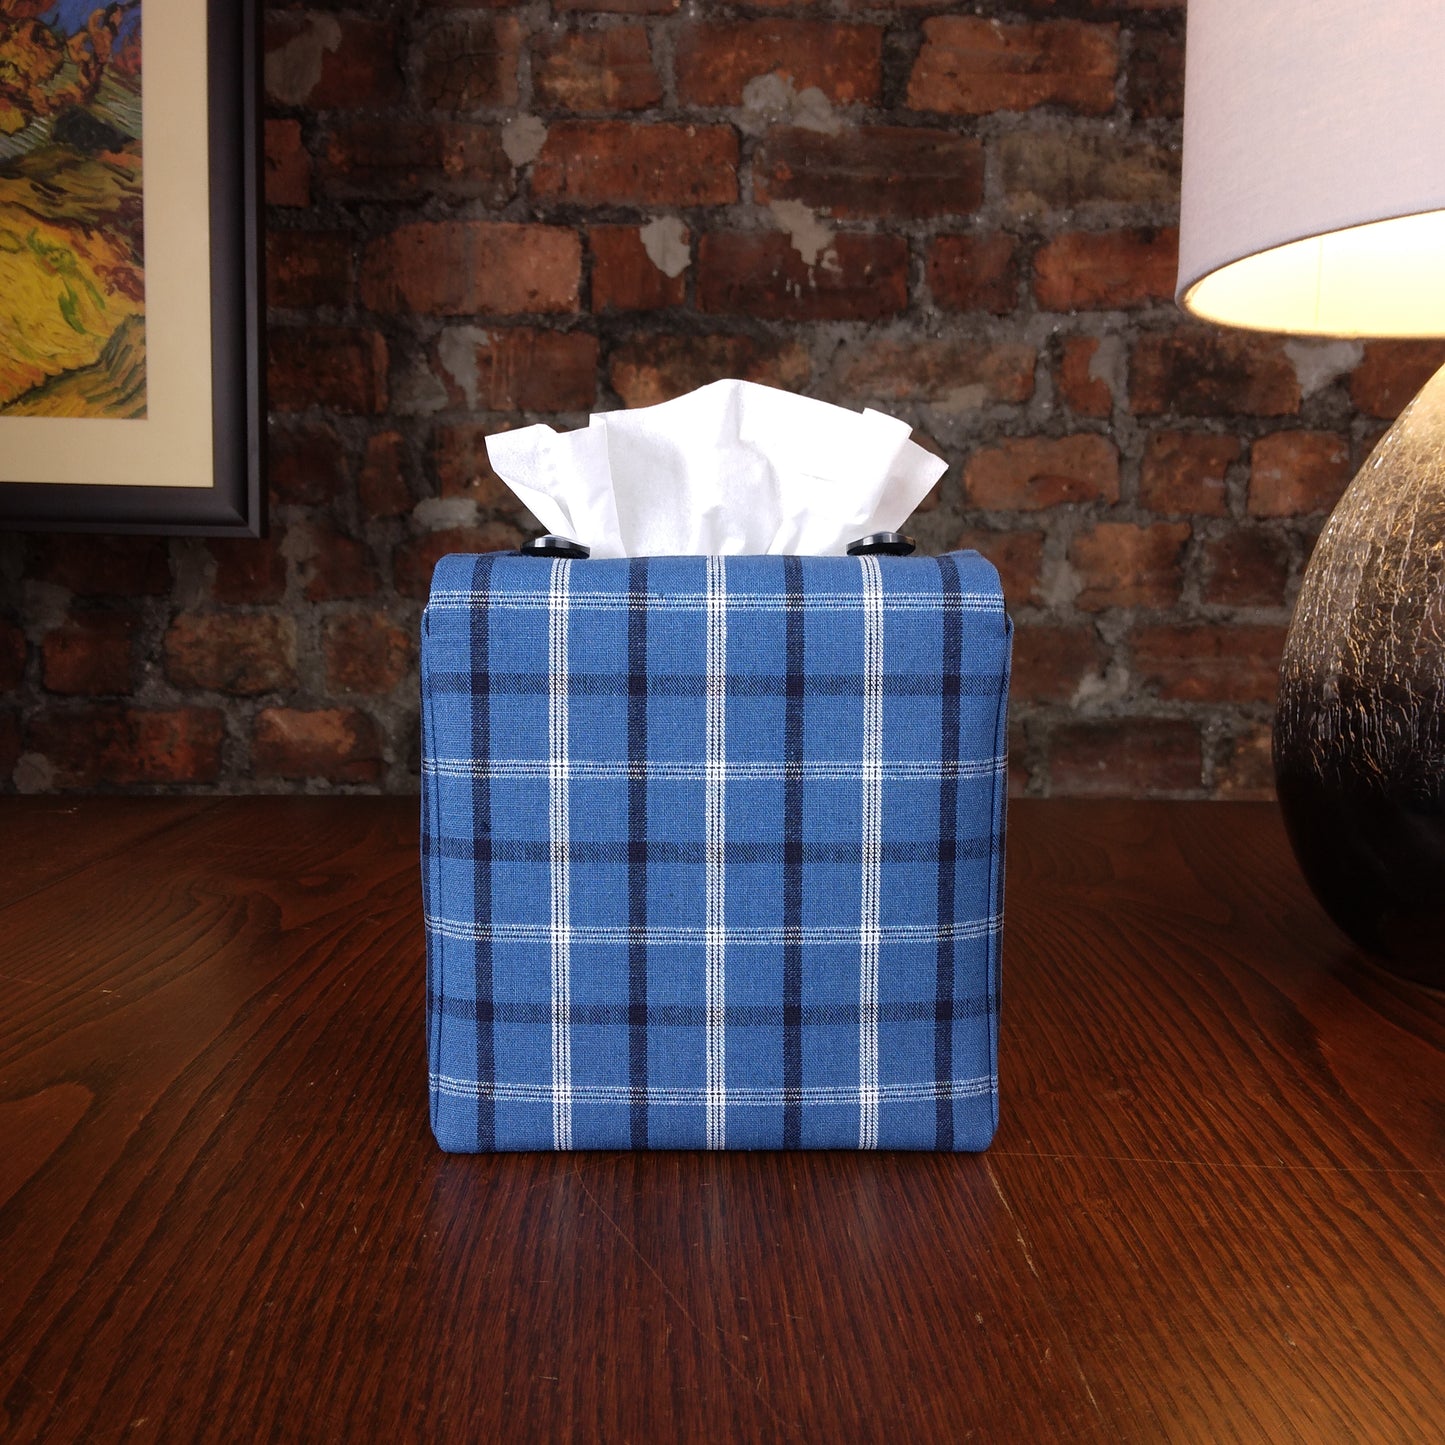 Cube Fabric Tissue Box Cover - Black, White, & Blue Plaid